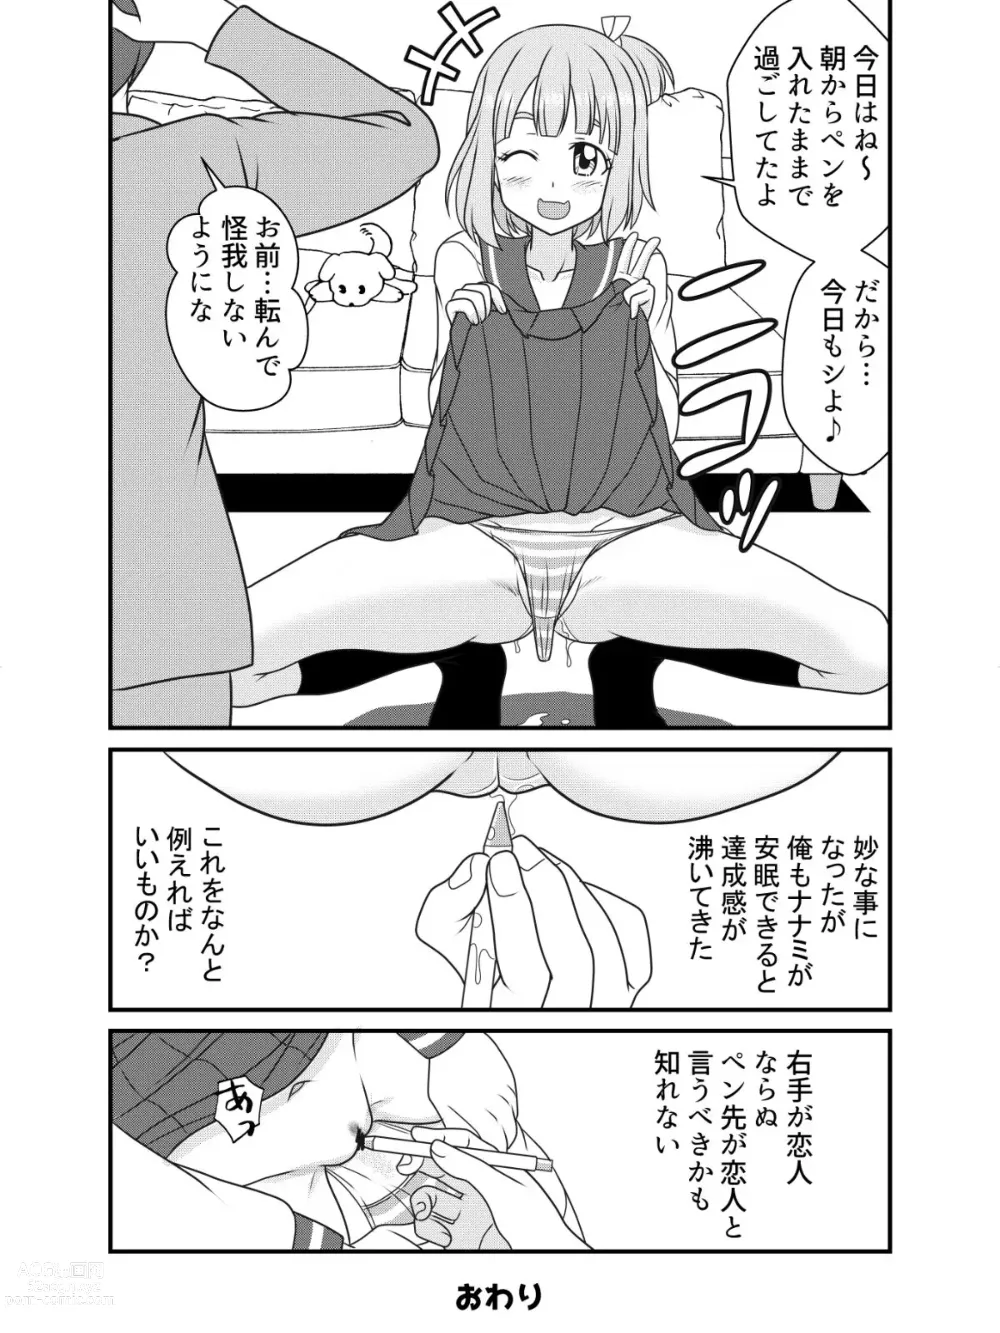 Page 12 of doujinshi Pen Saki no Koibito